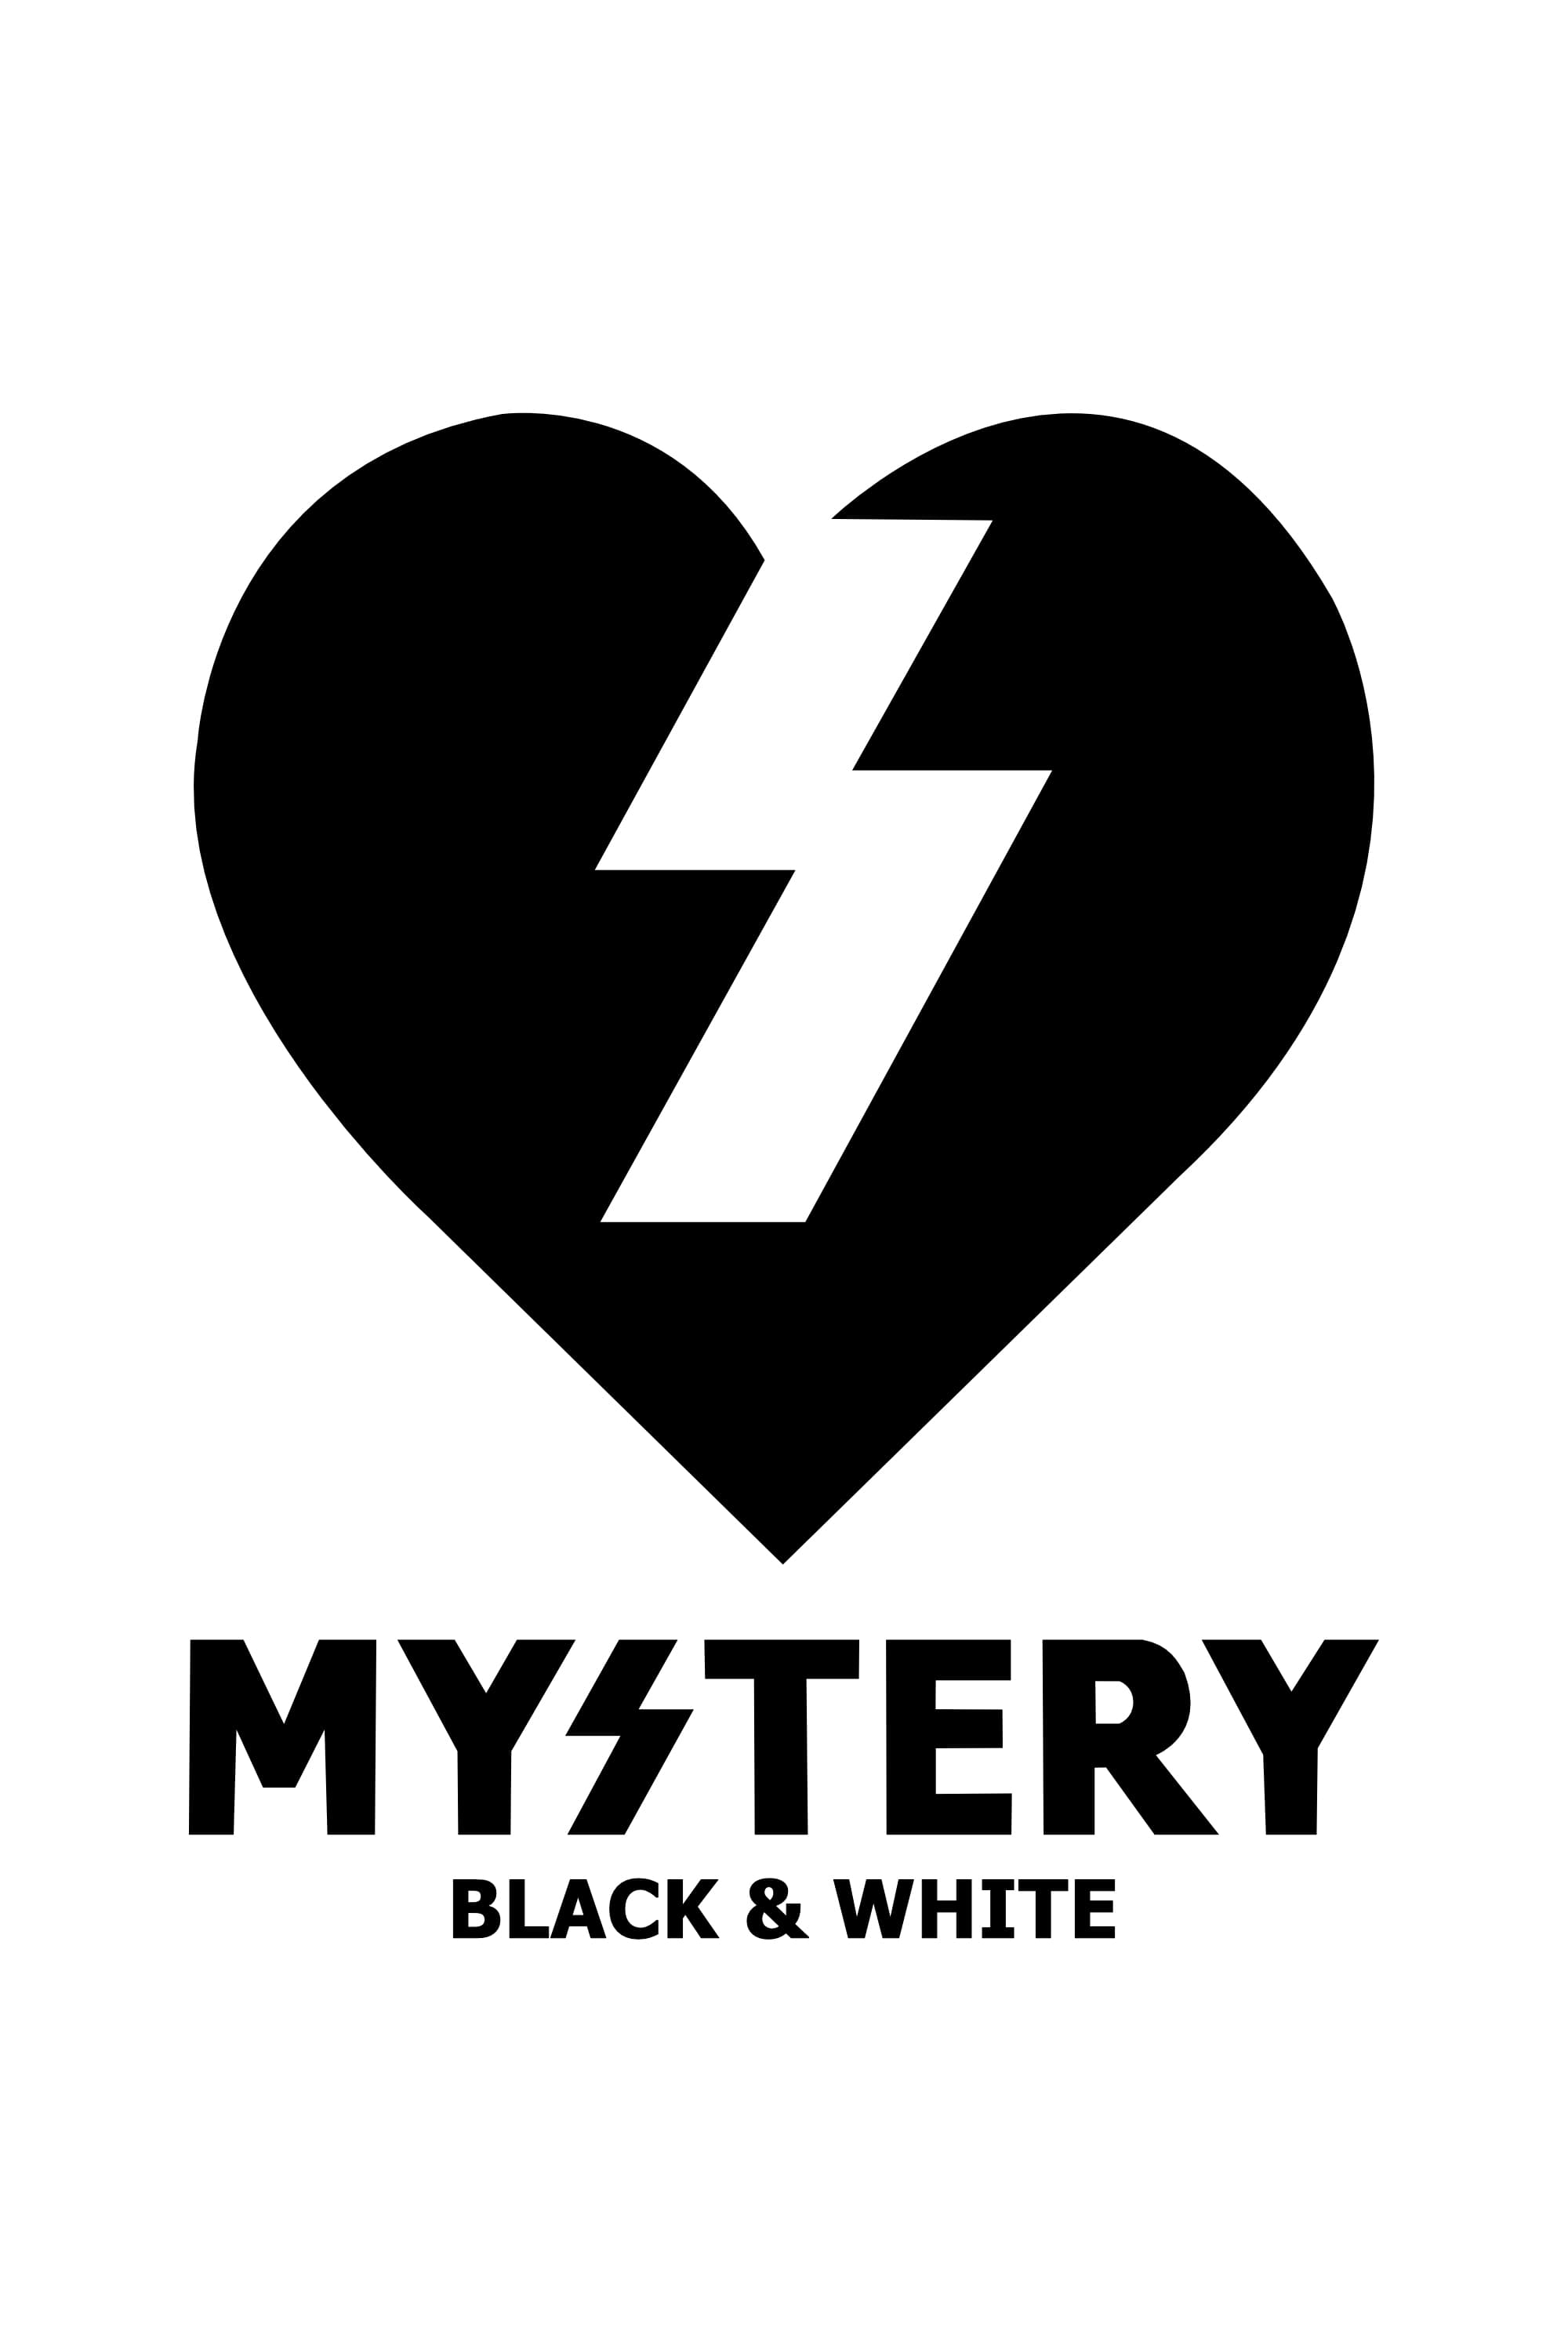 Mystery - Black & White